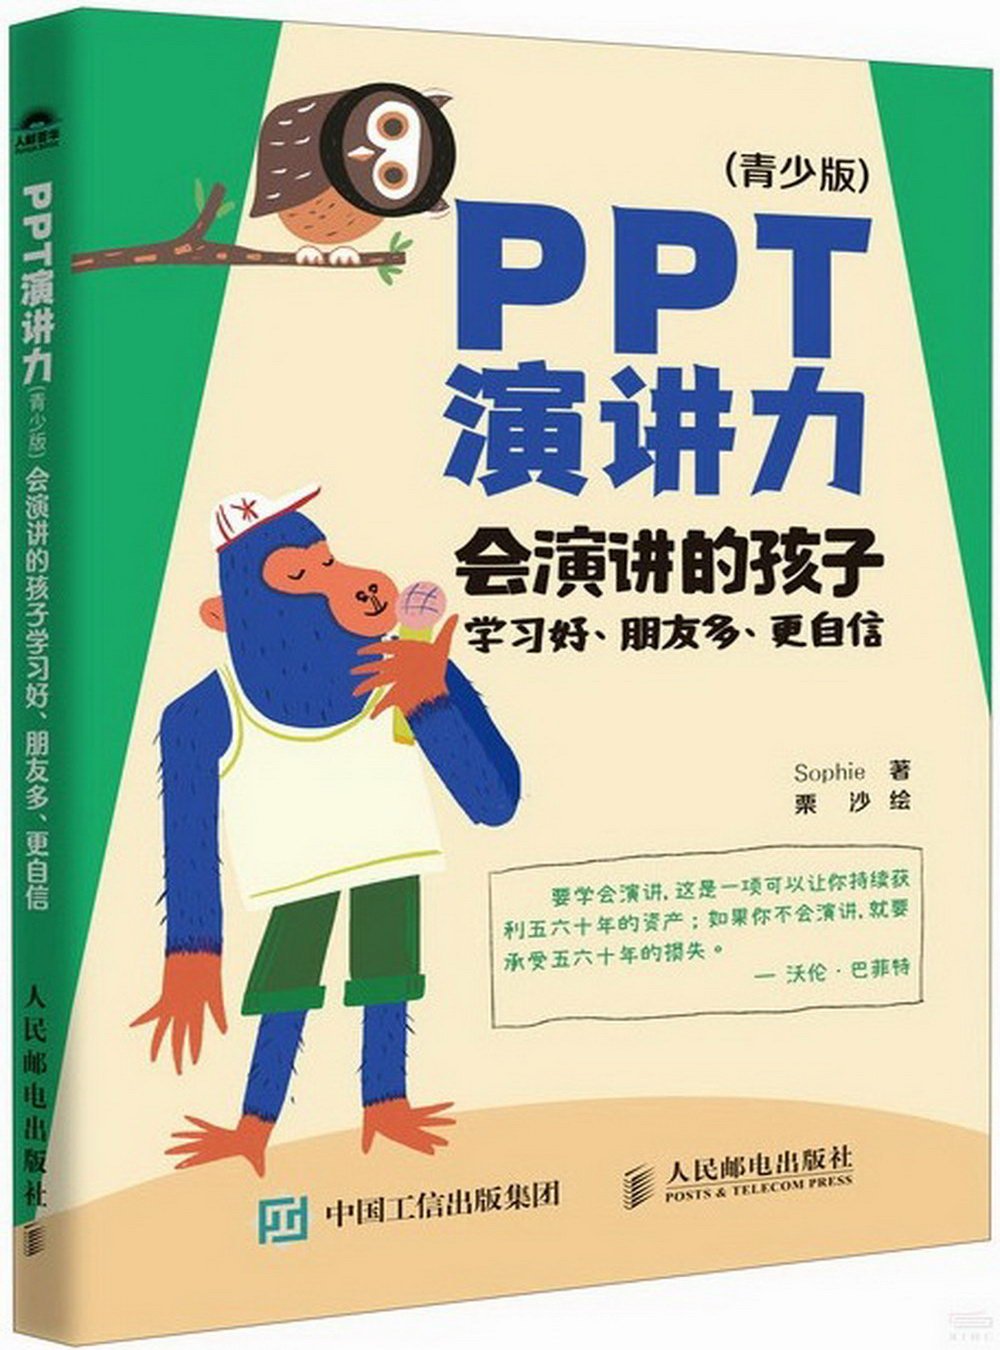 PPT演講力（青少版）：會演講的孩子學習好、朋友多、更自信